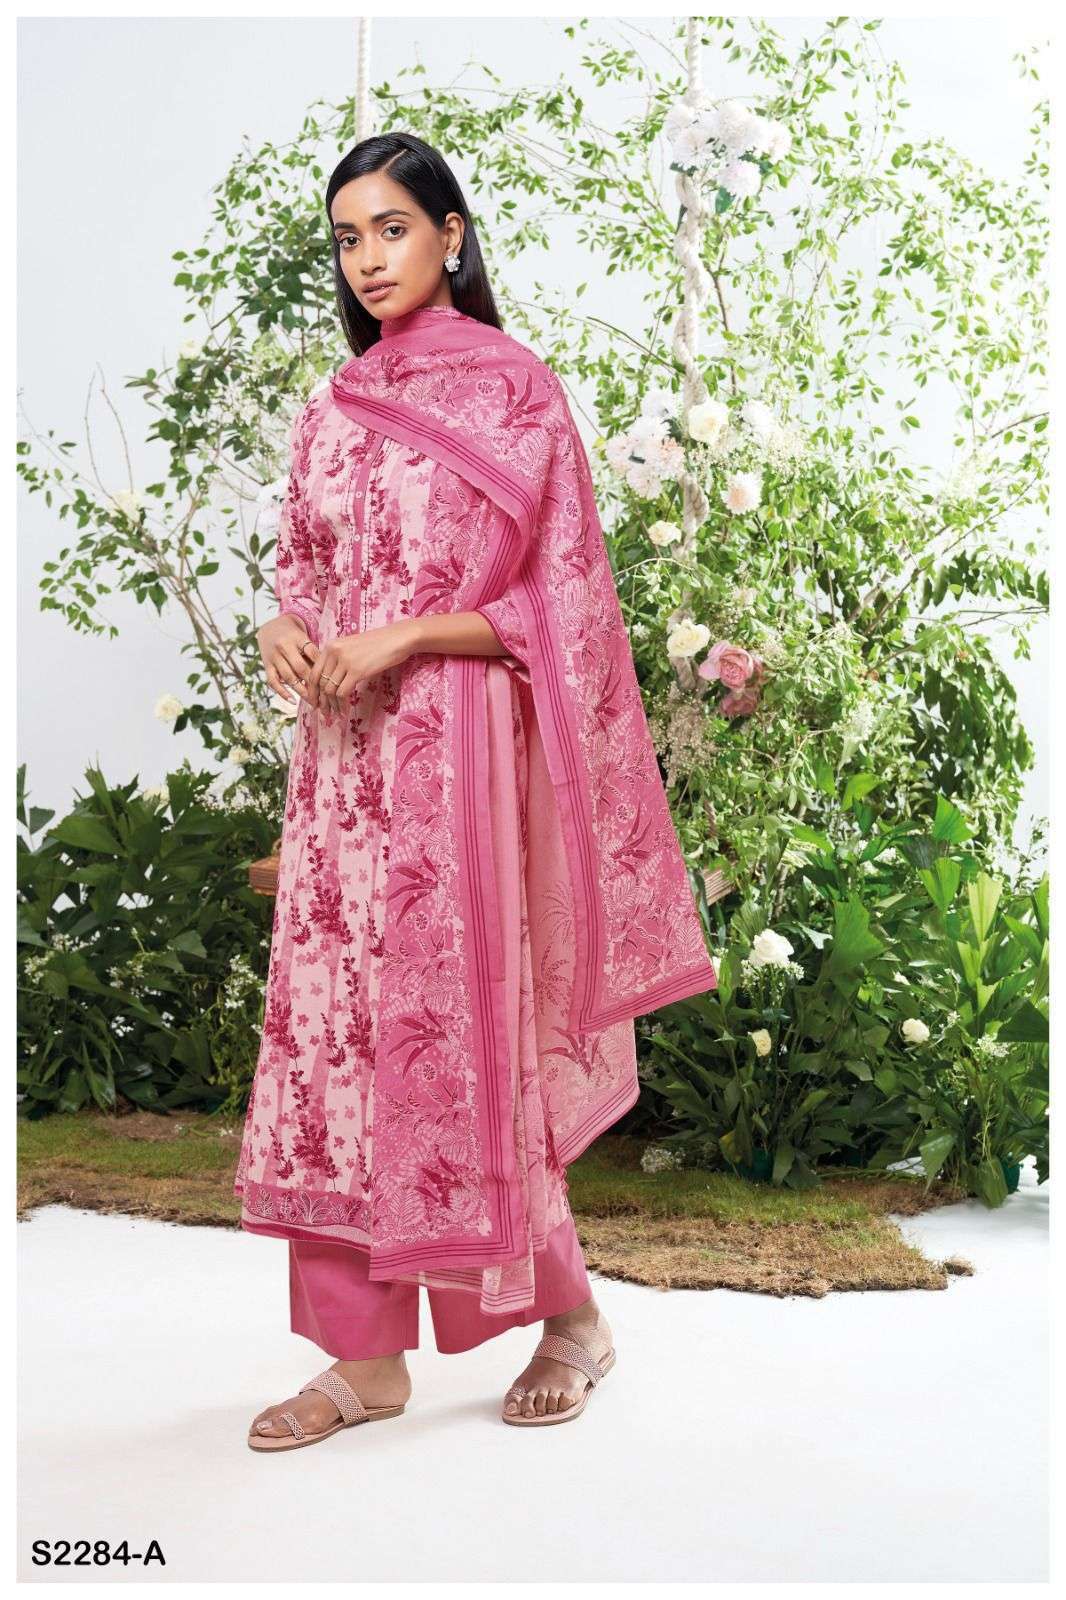 Ganga ELKIN 2284 Dress Materials Wholesale catalog